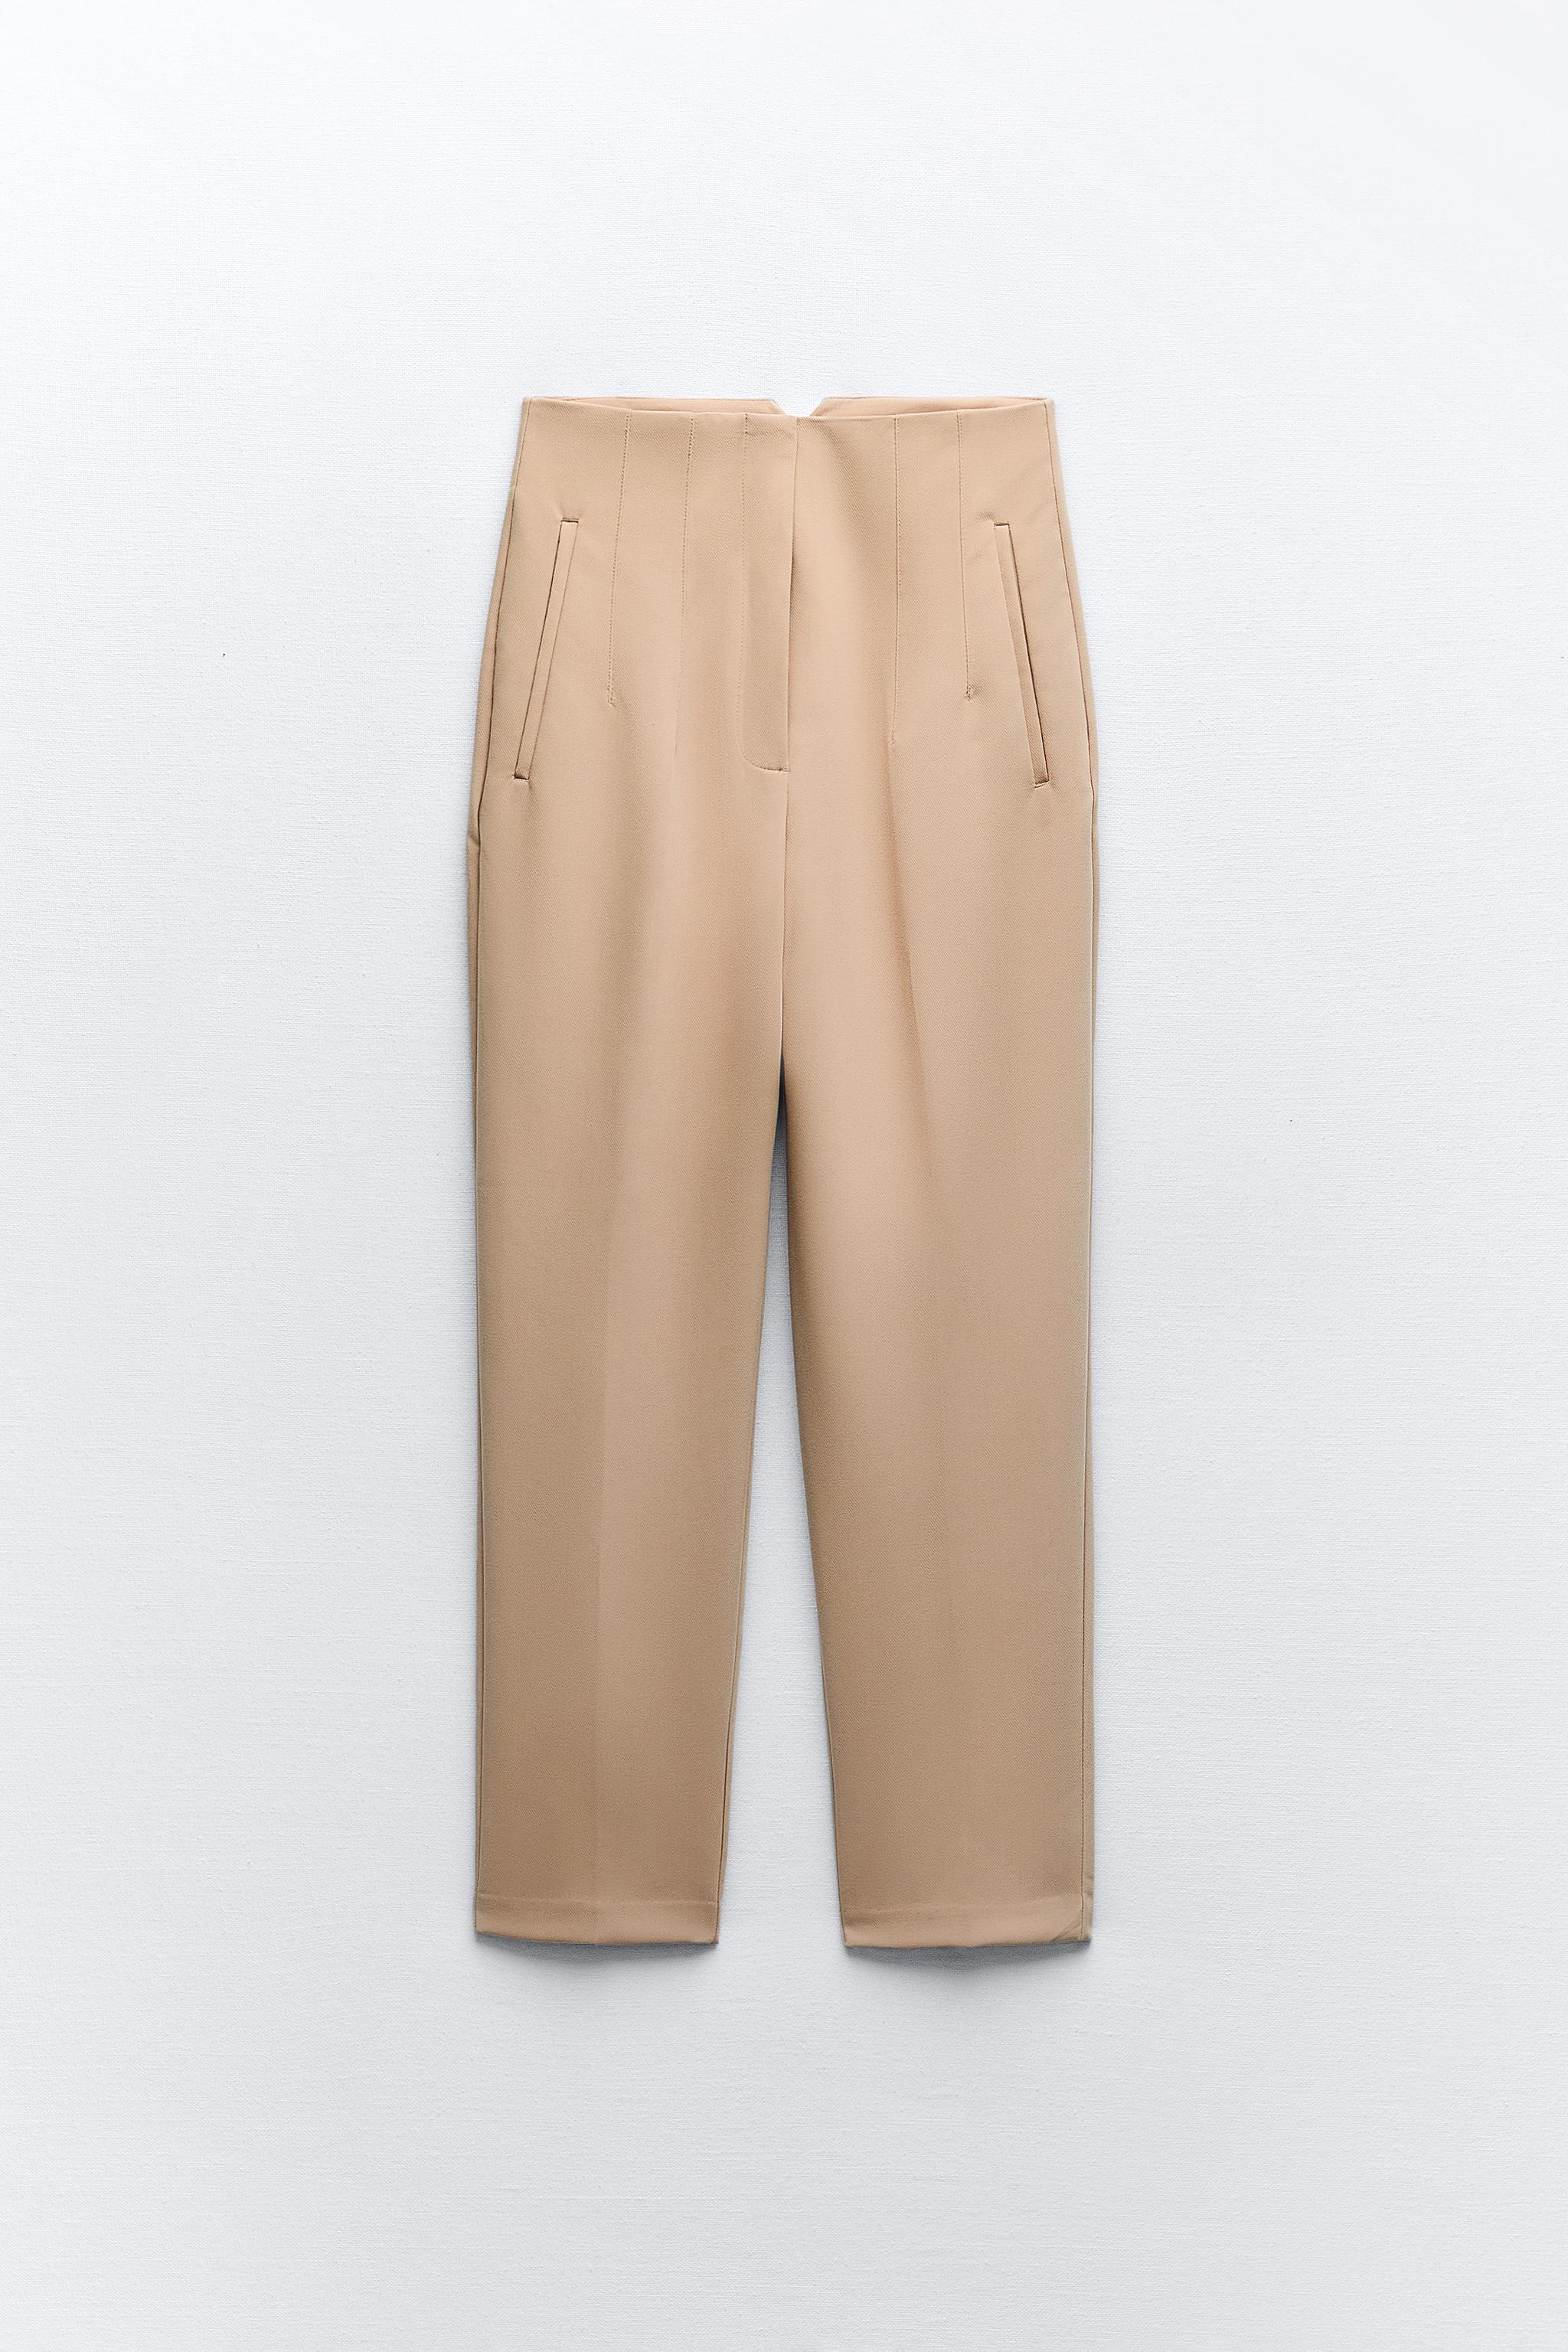 BN Zara High Waist Trousers with Lined Pants, Women's Fashion